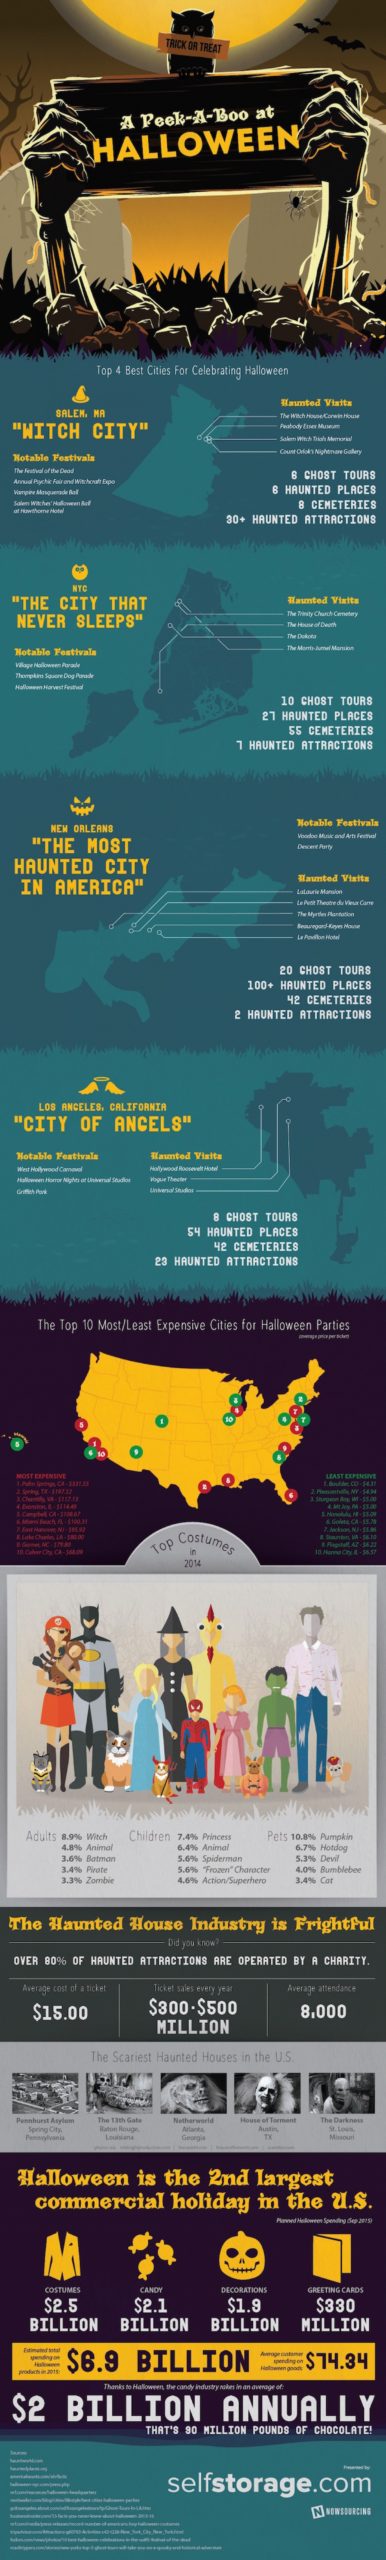 halloween-spending-across-america